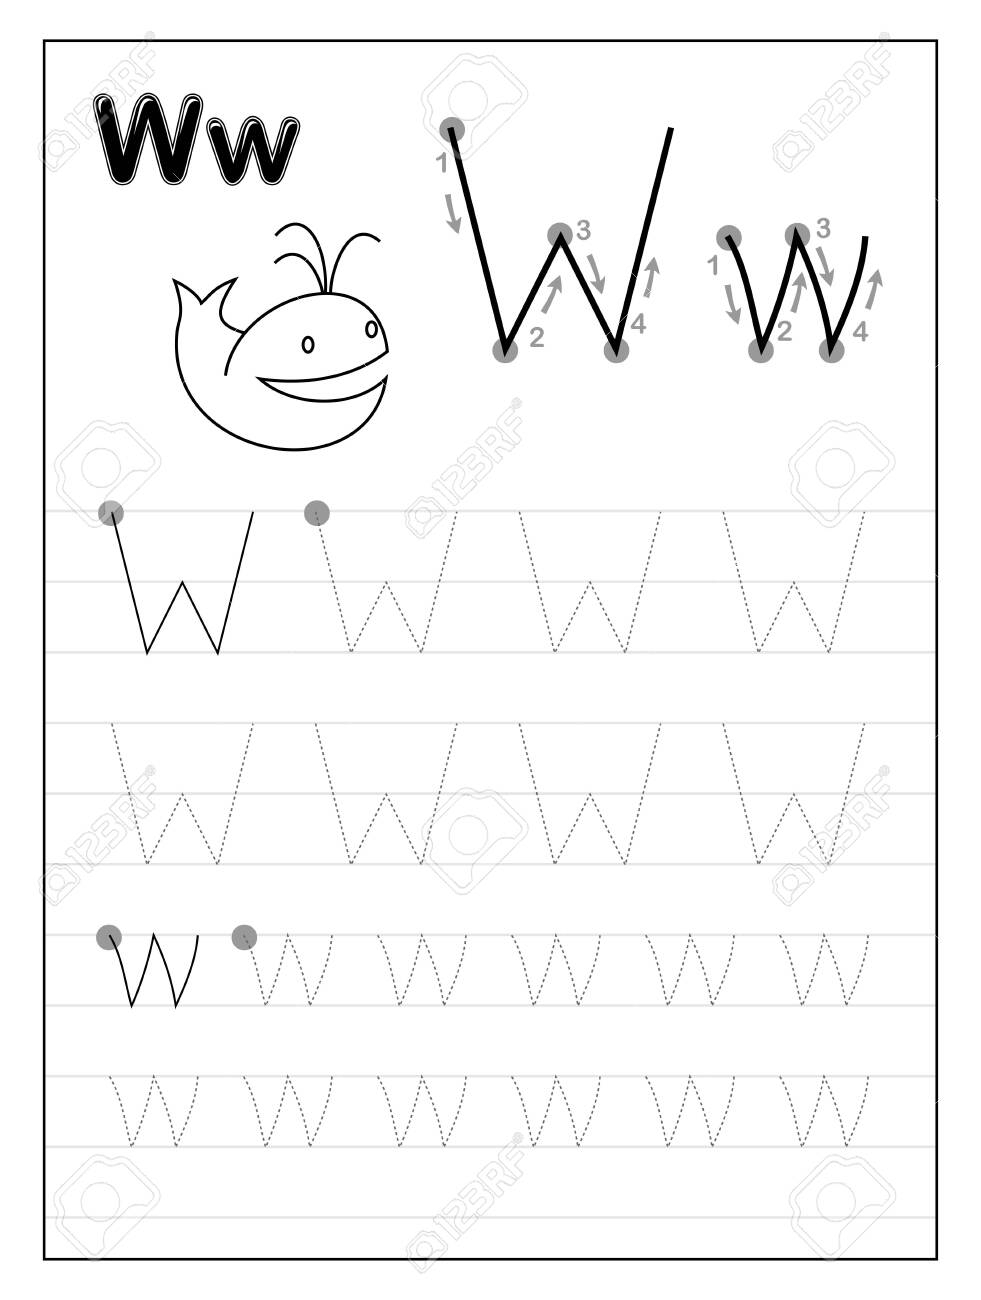 Worksheet ~ Dotted Alphabet Worksheets Worksheet Ideas for Letter W Tracing Preschool